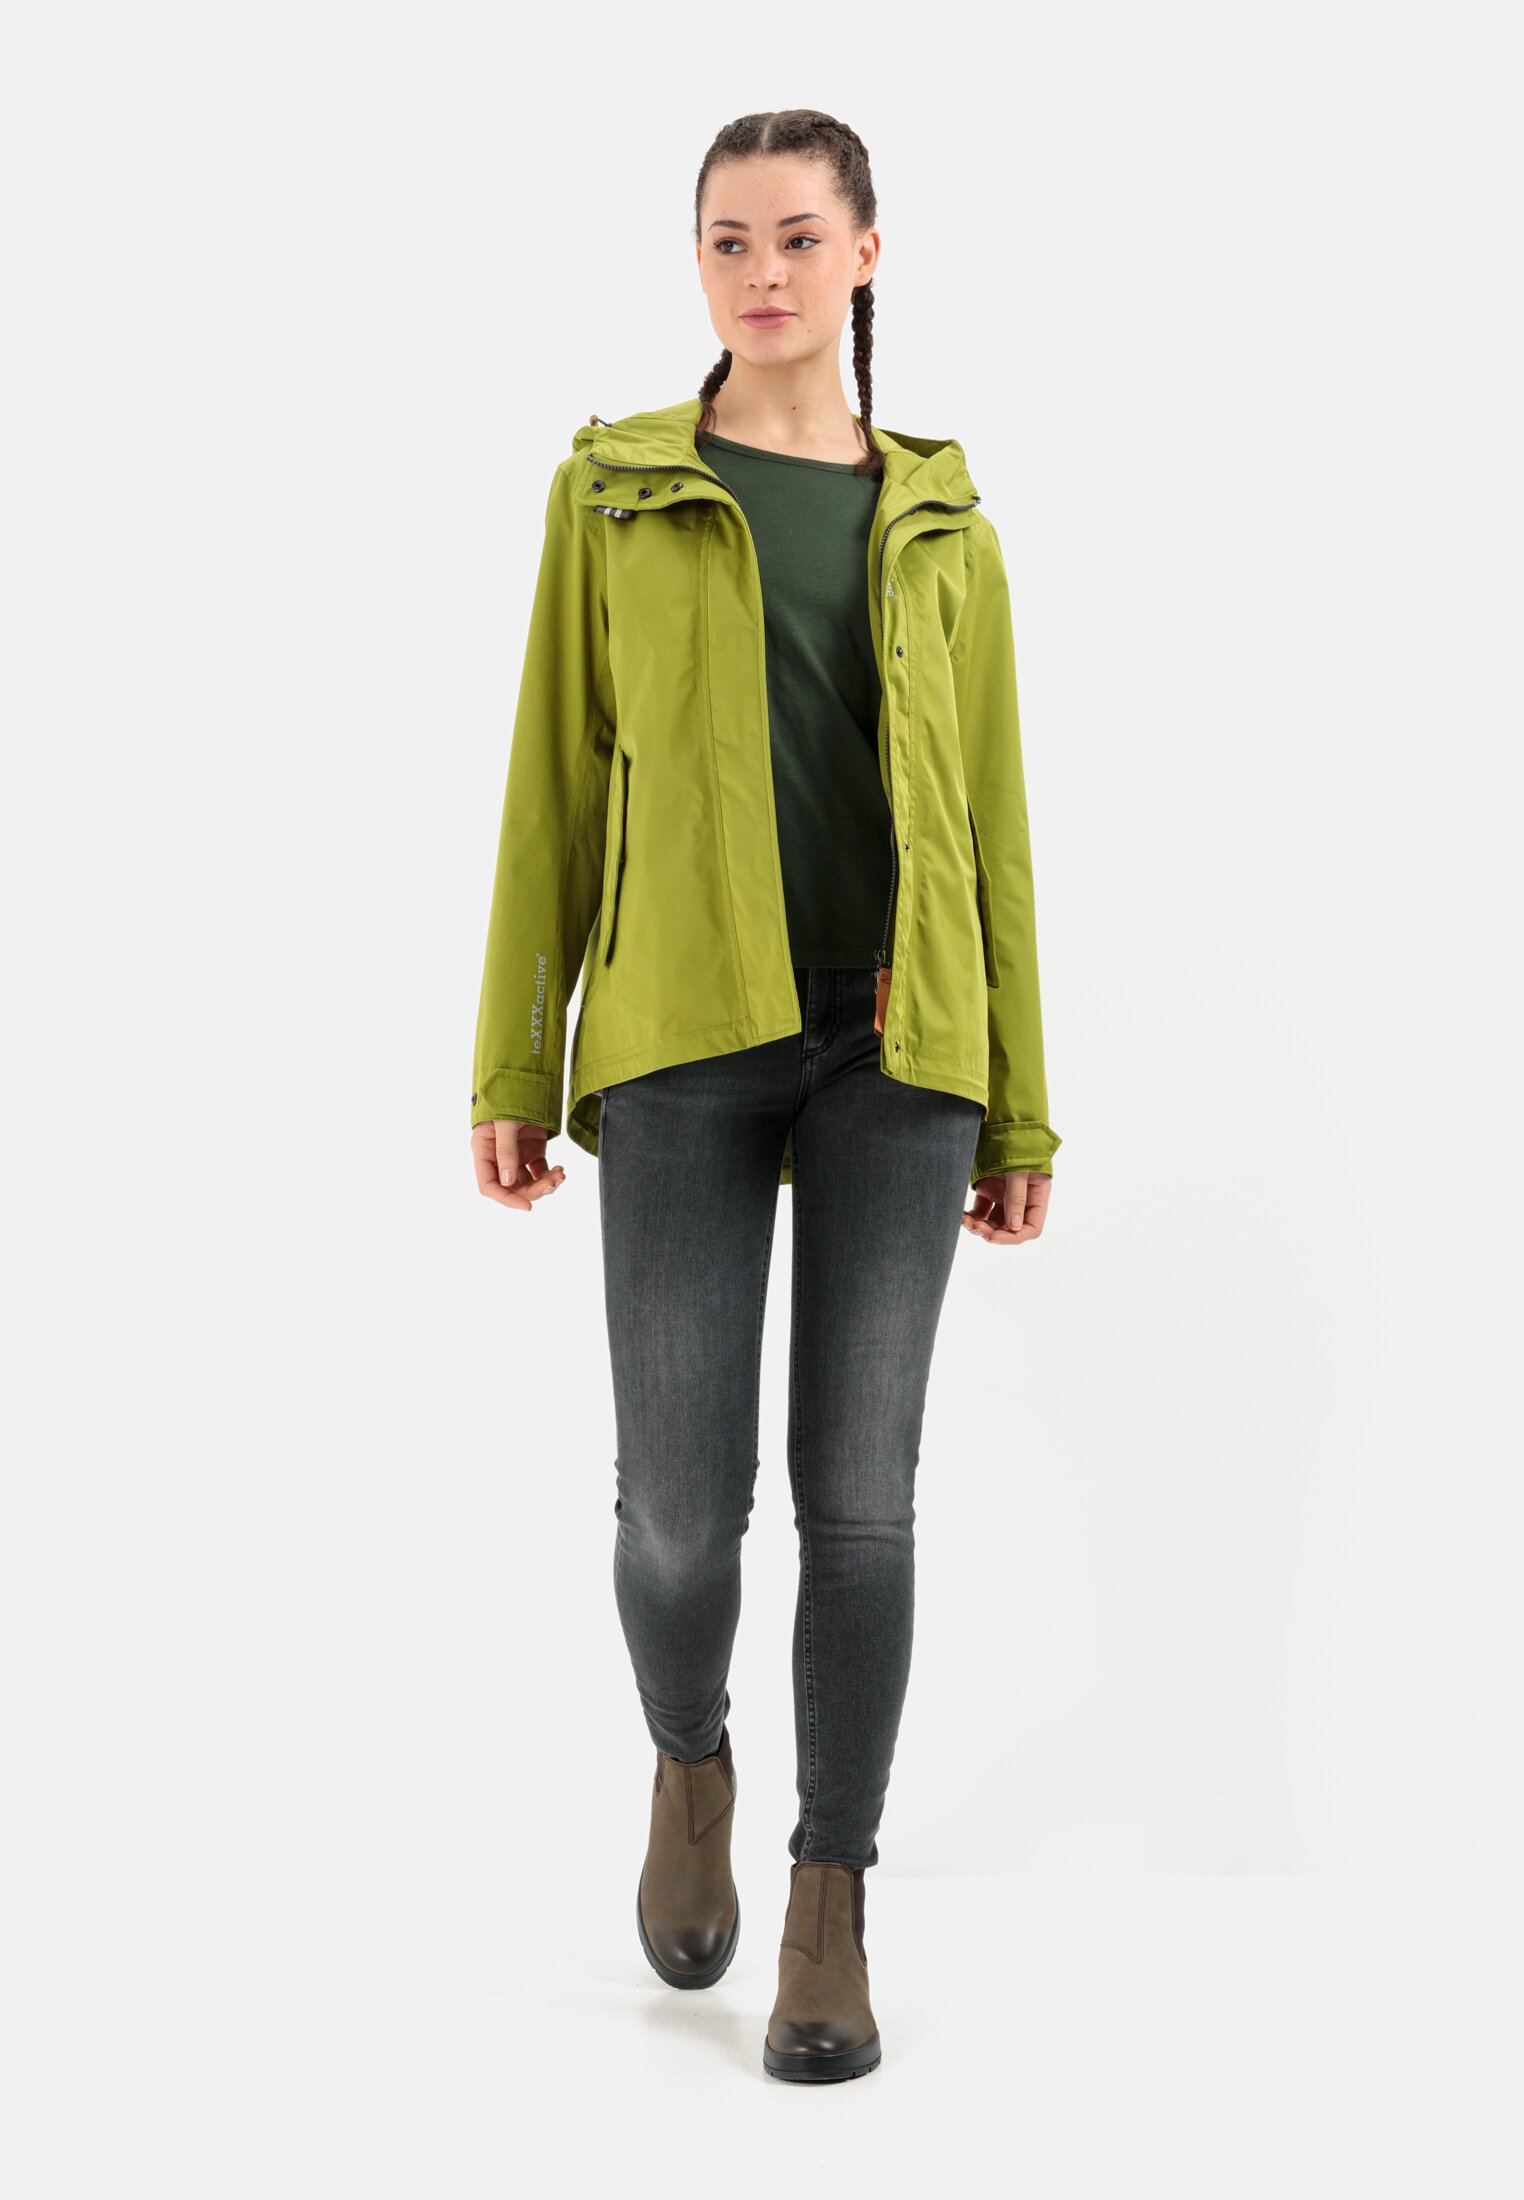 teXXXactive® jacket for Damen in 34 camel Green active | 